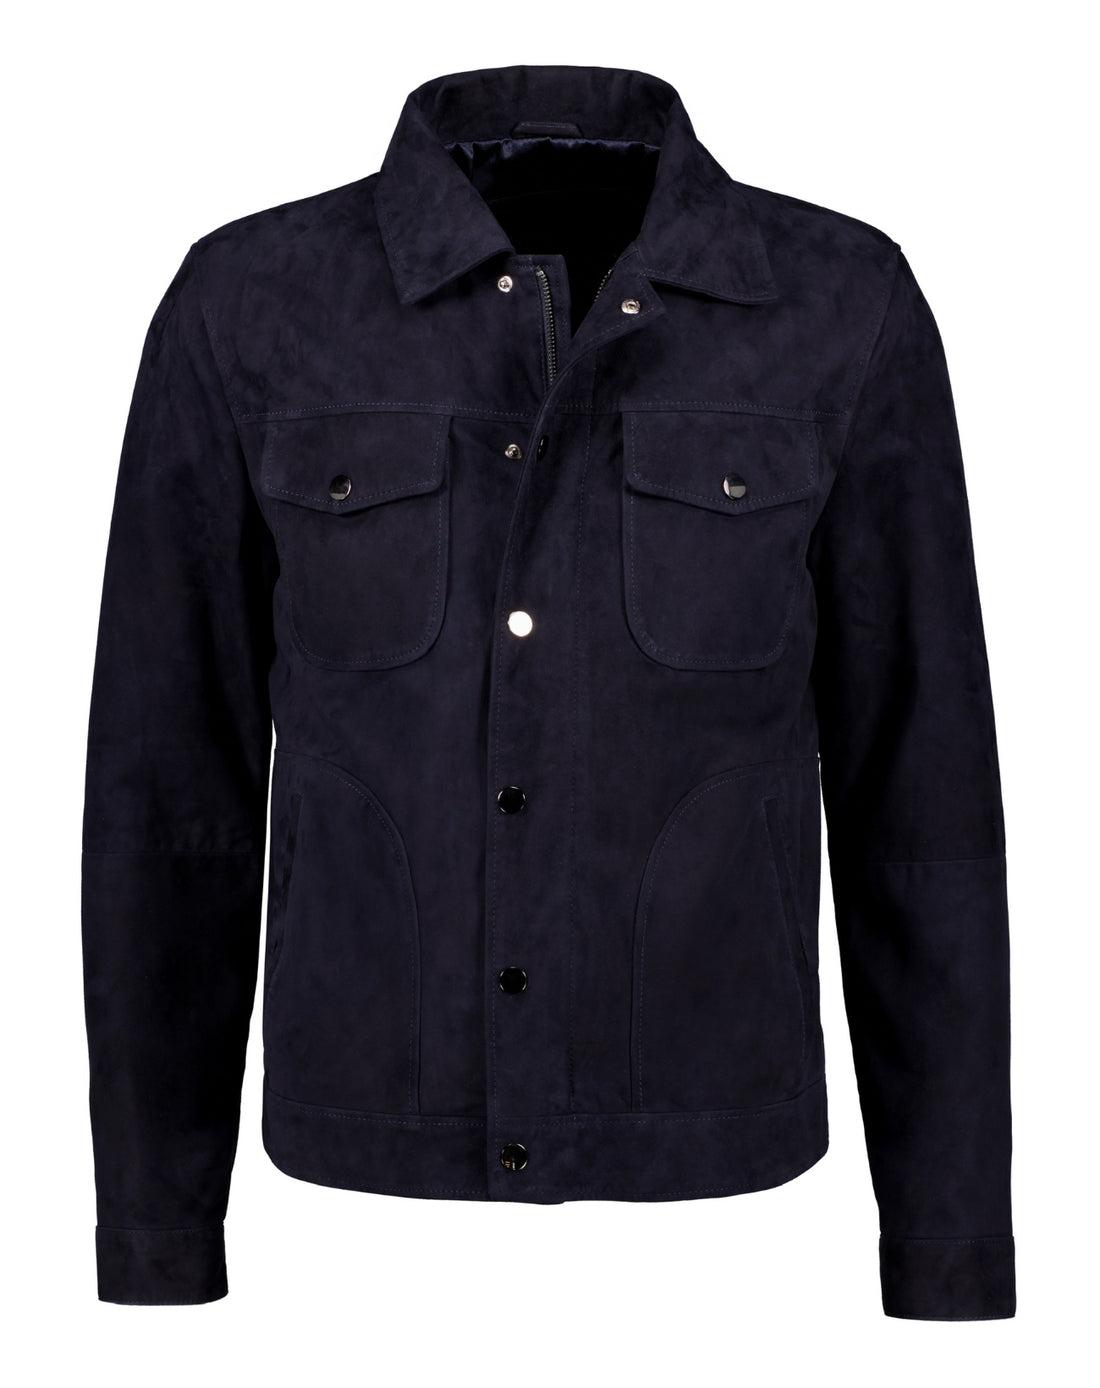 Lambskin Suede Leather Jacket - Navy - Leather Jacket by Urbbana